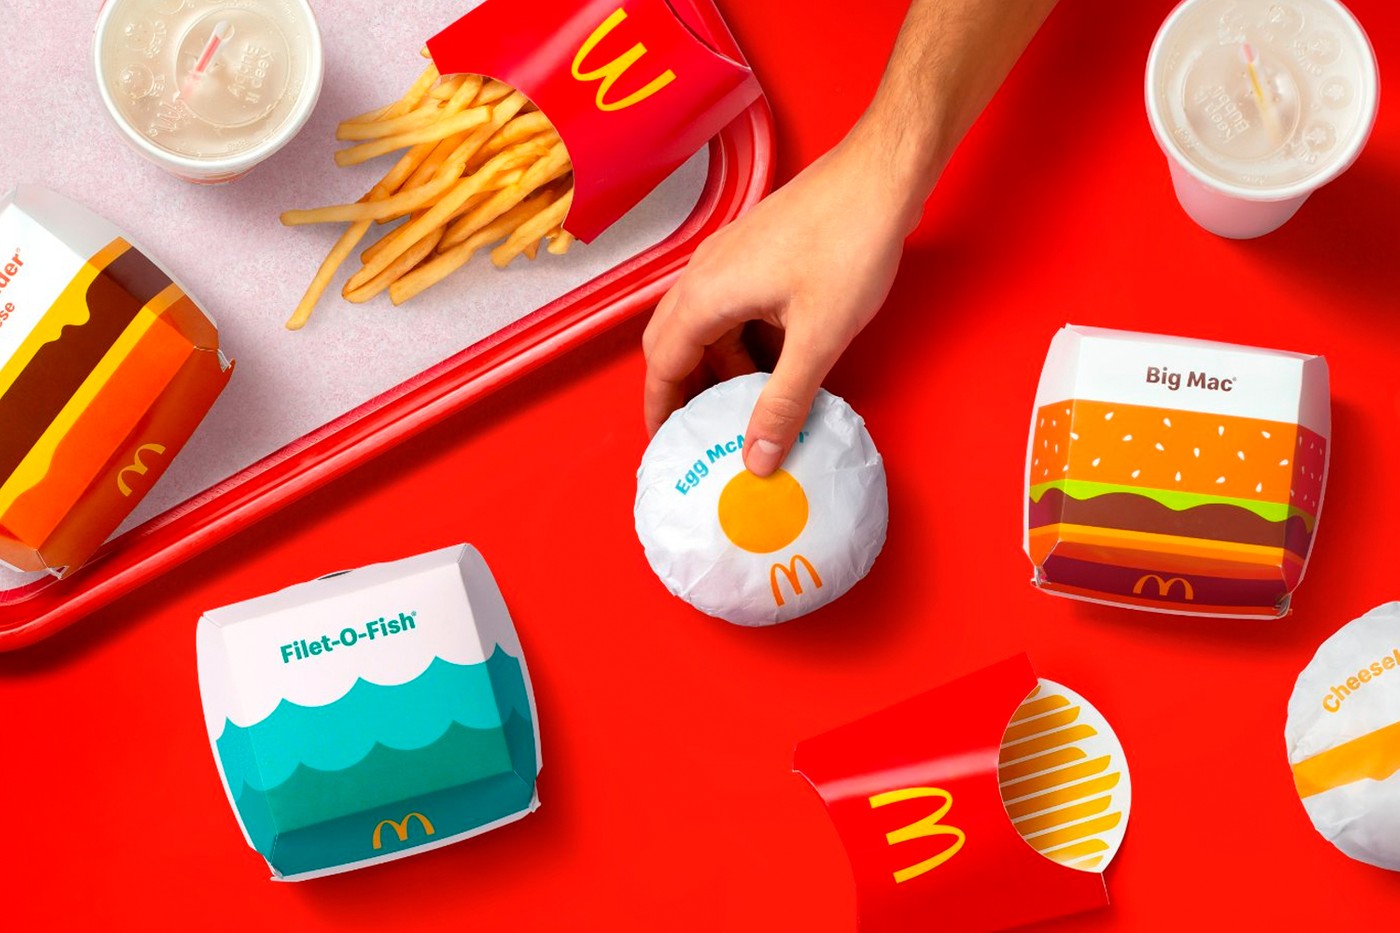 Top 10: CPG growth, McDonald’s packaging, frozen food